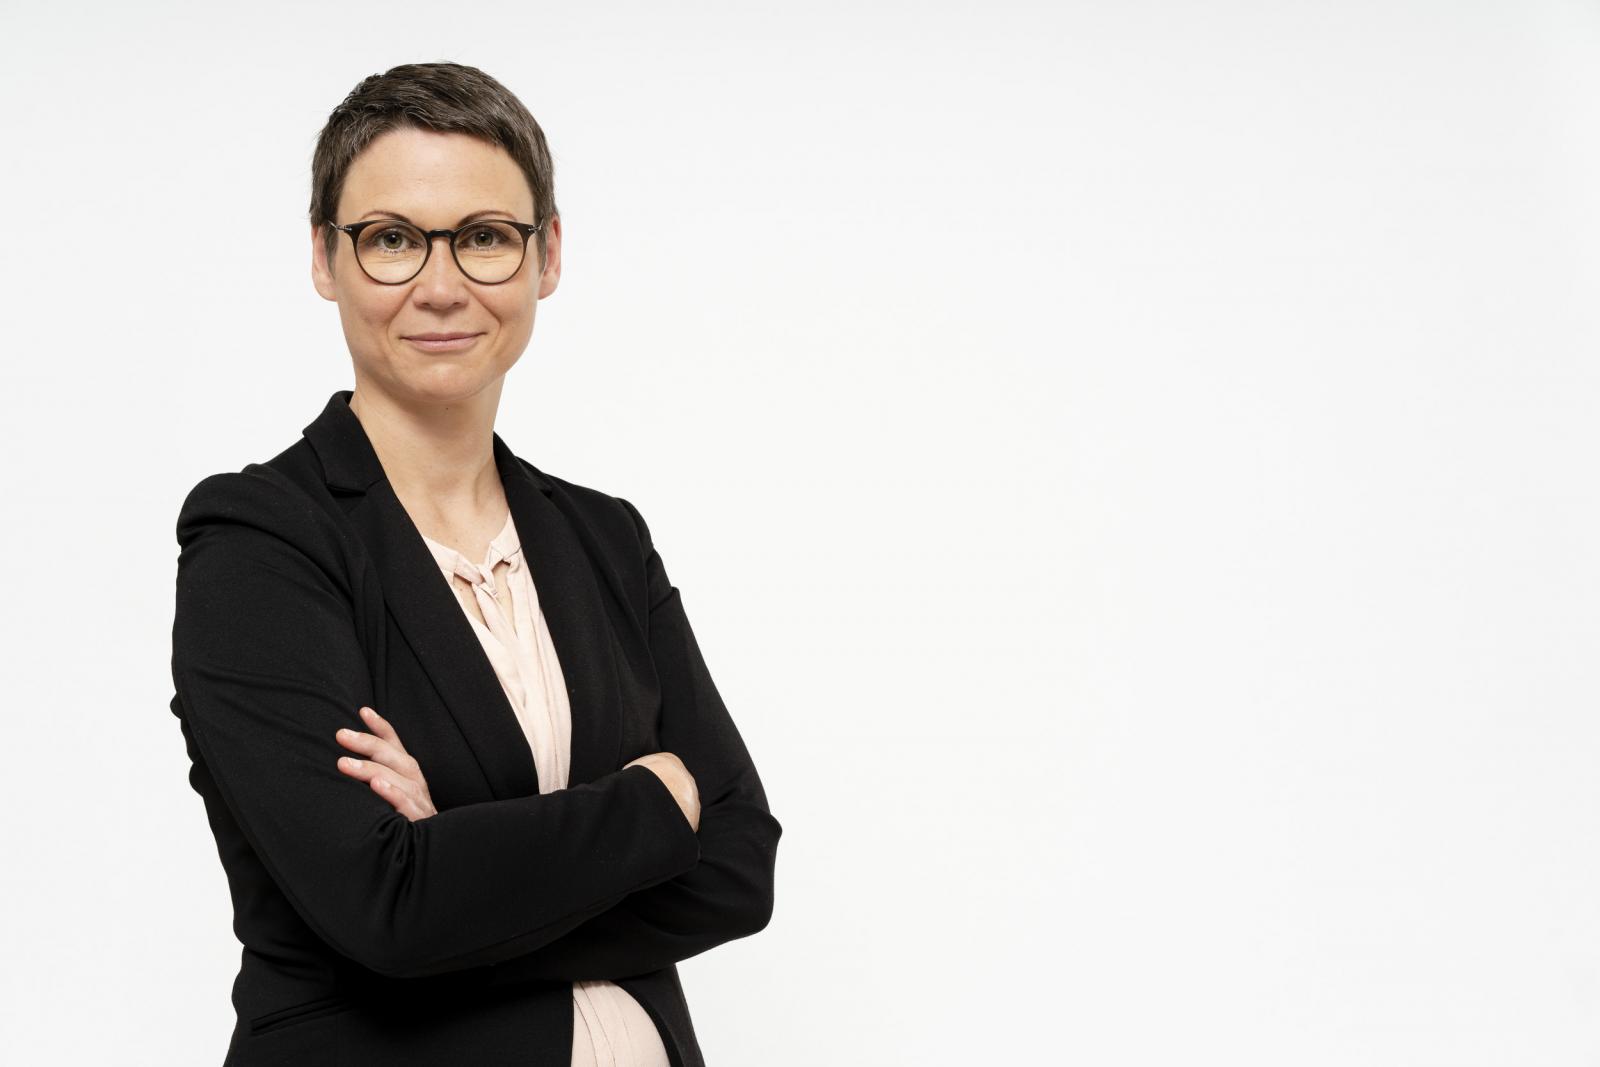 Ulrike Eifler, Politician for Die Linke, Campaign 2021